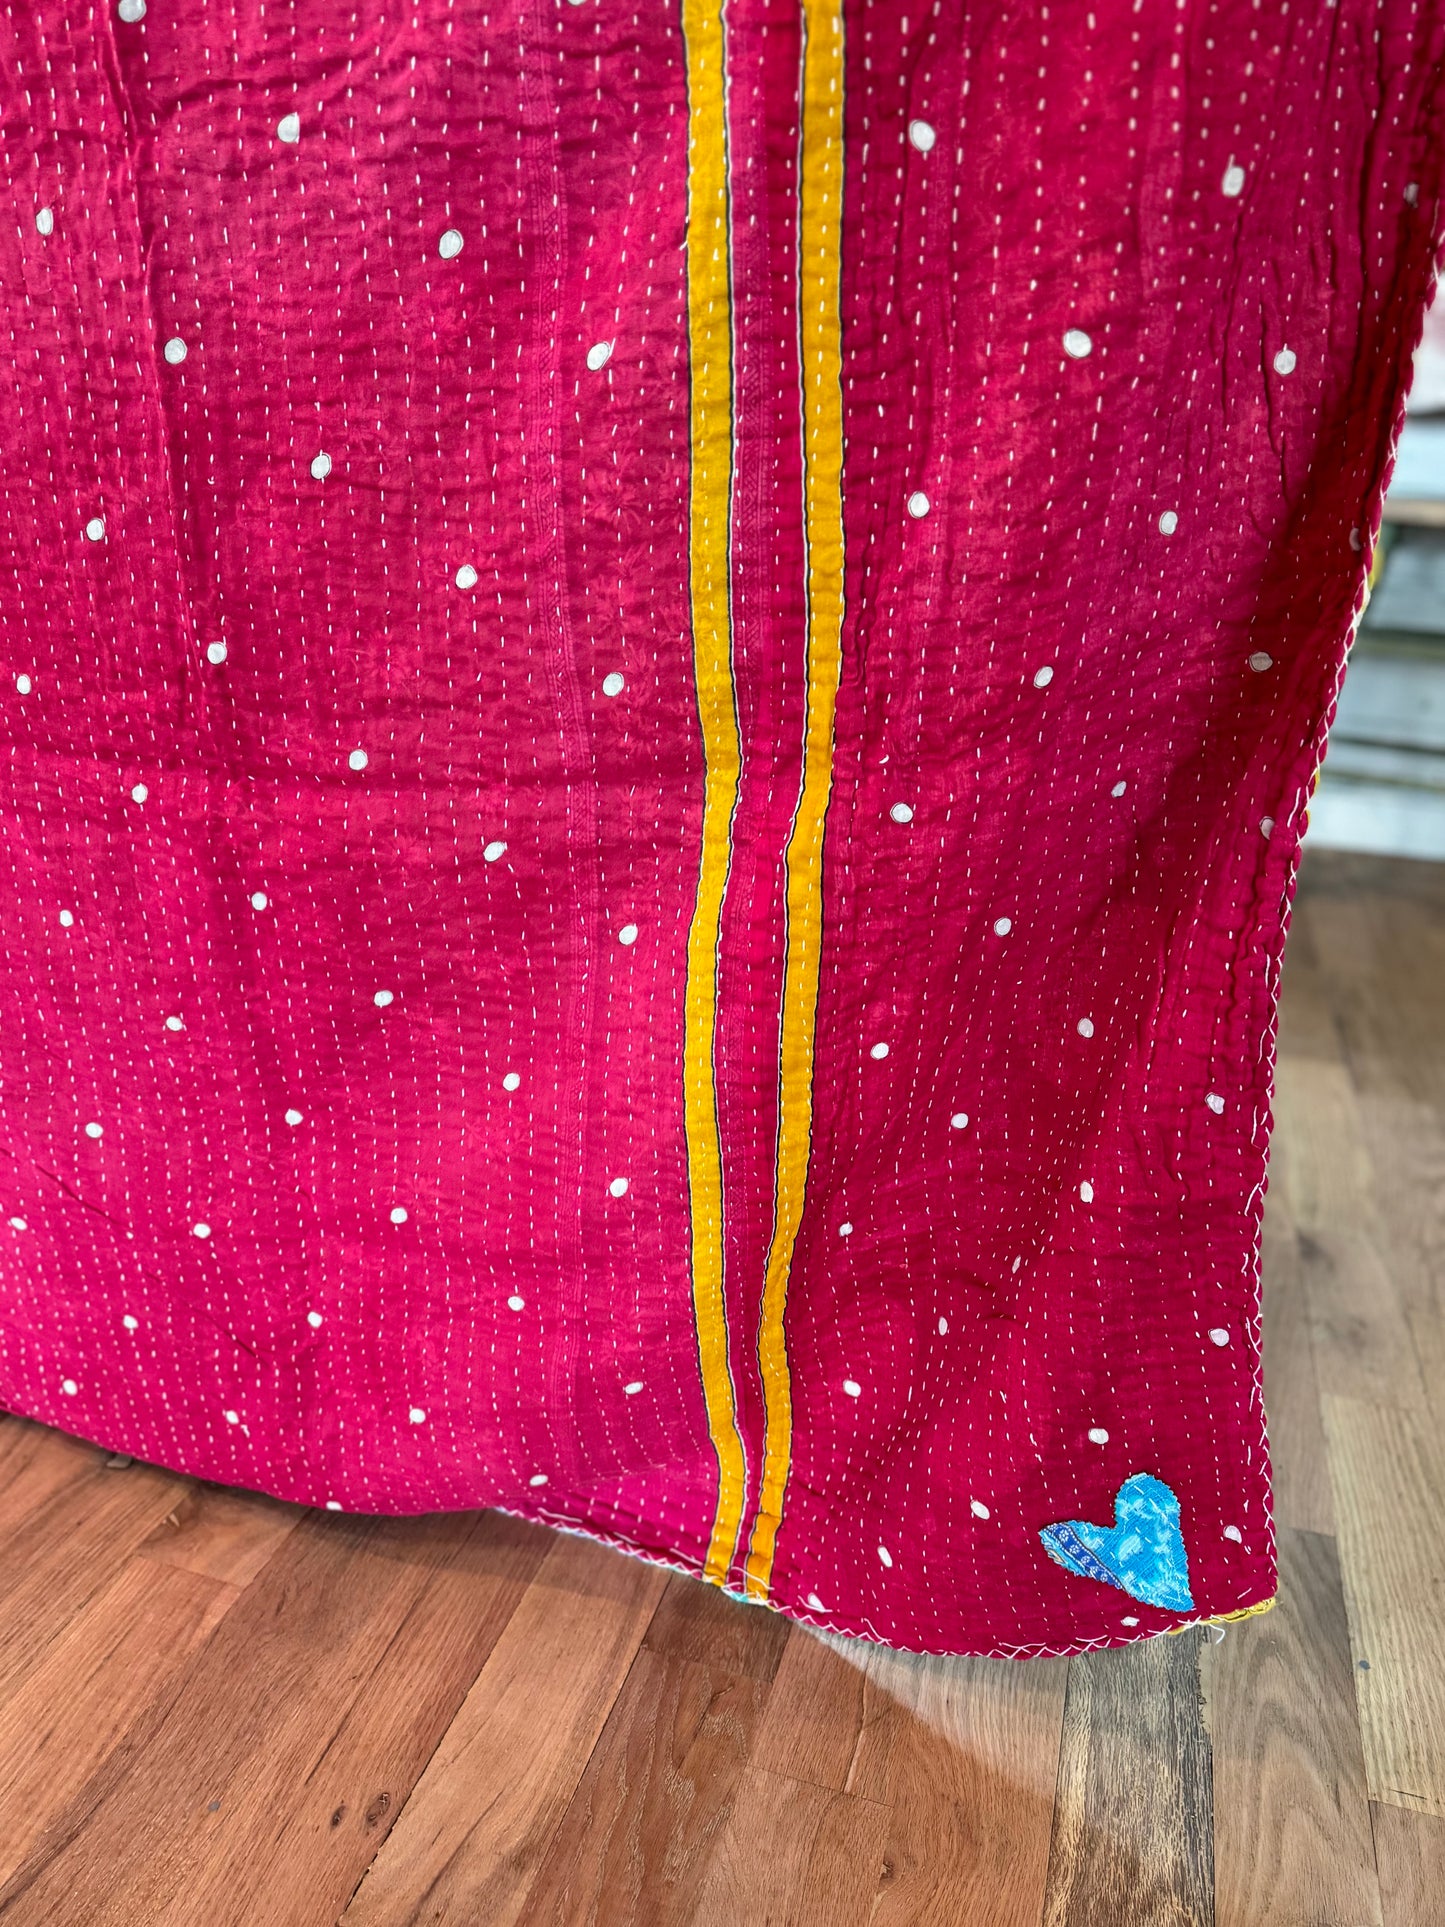 Vintage Kantha Fabric Quilt 4 - Handstitched - Quilt F 80x52” est